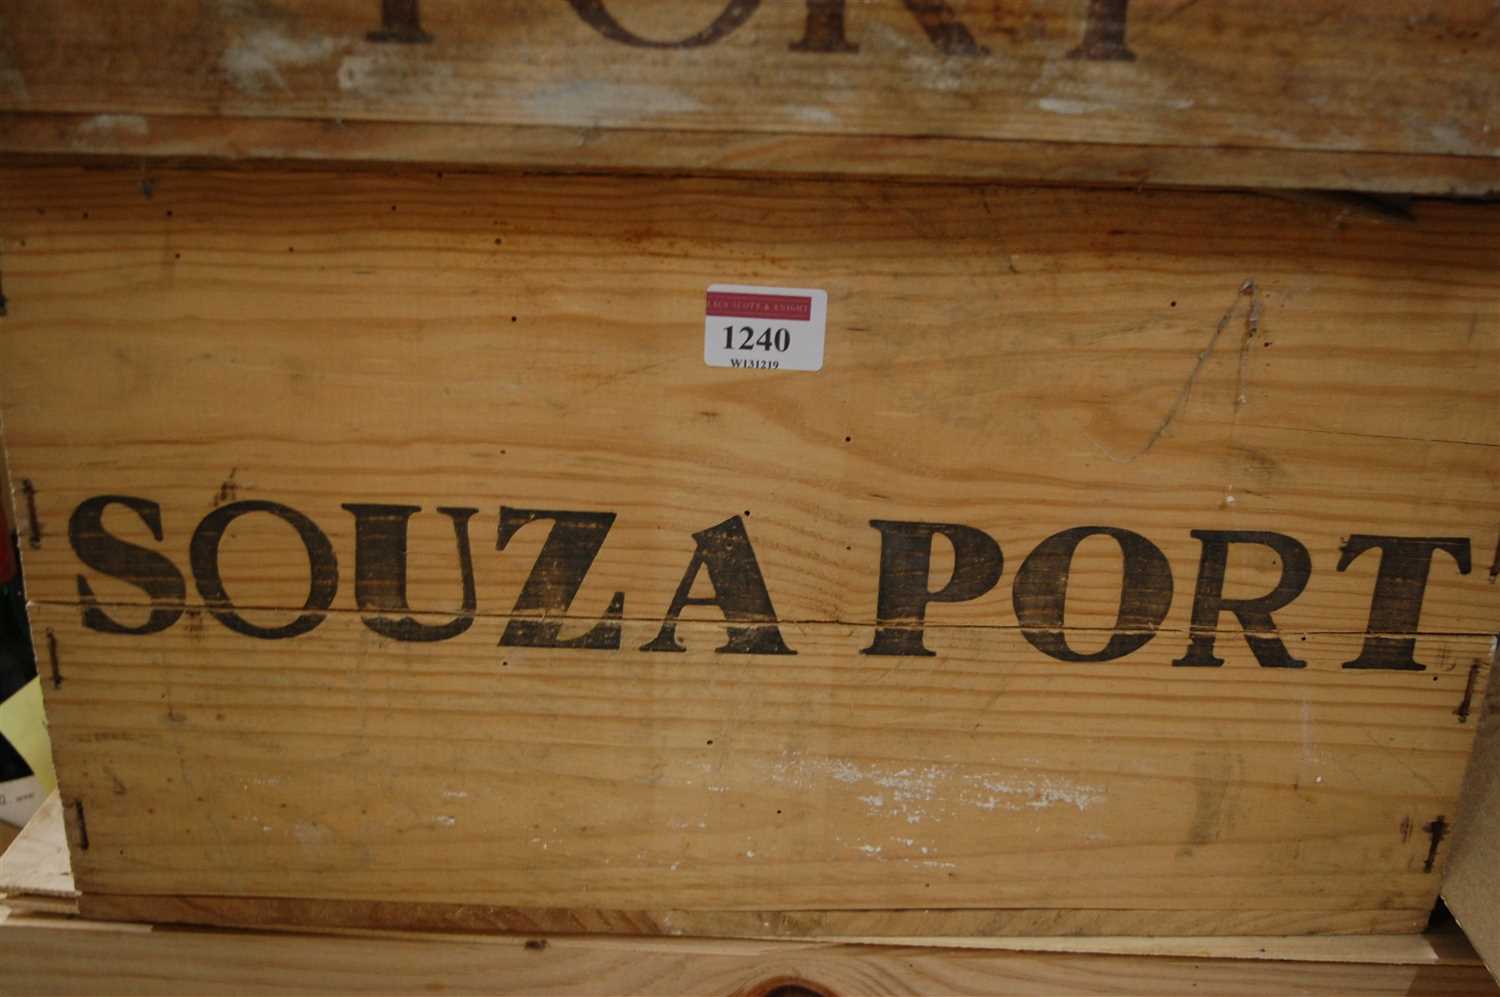 Lot 1240 - Souza, 1978 vintage port, twelve bottles (OWC)